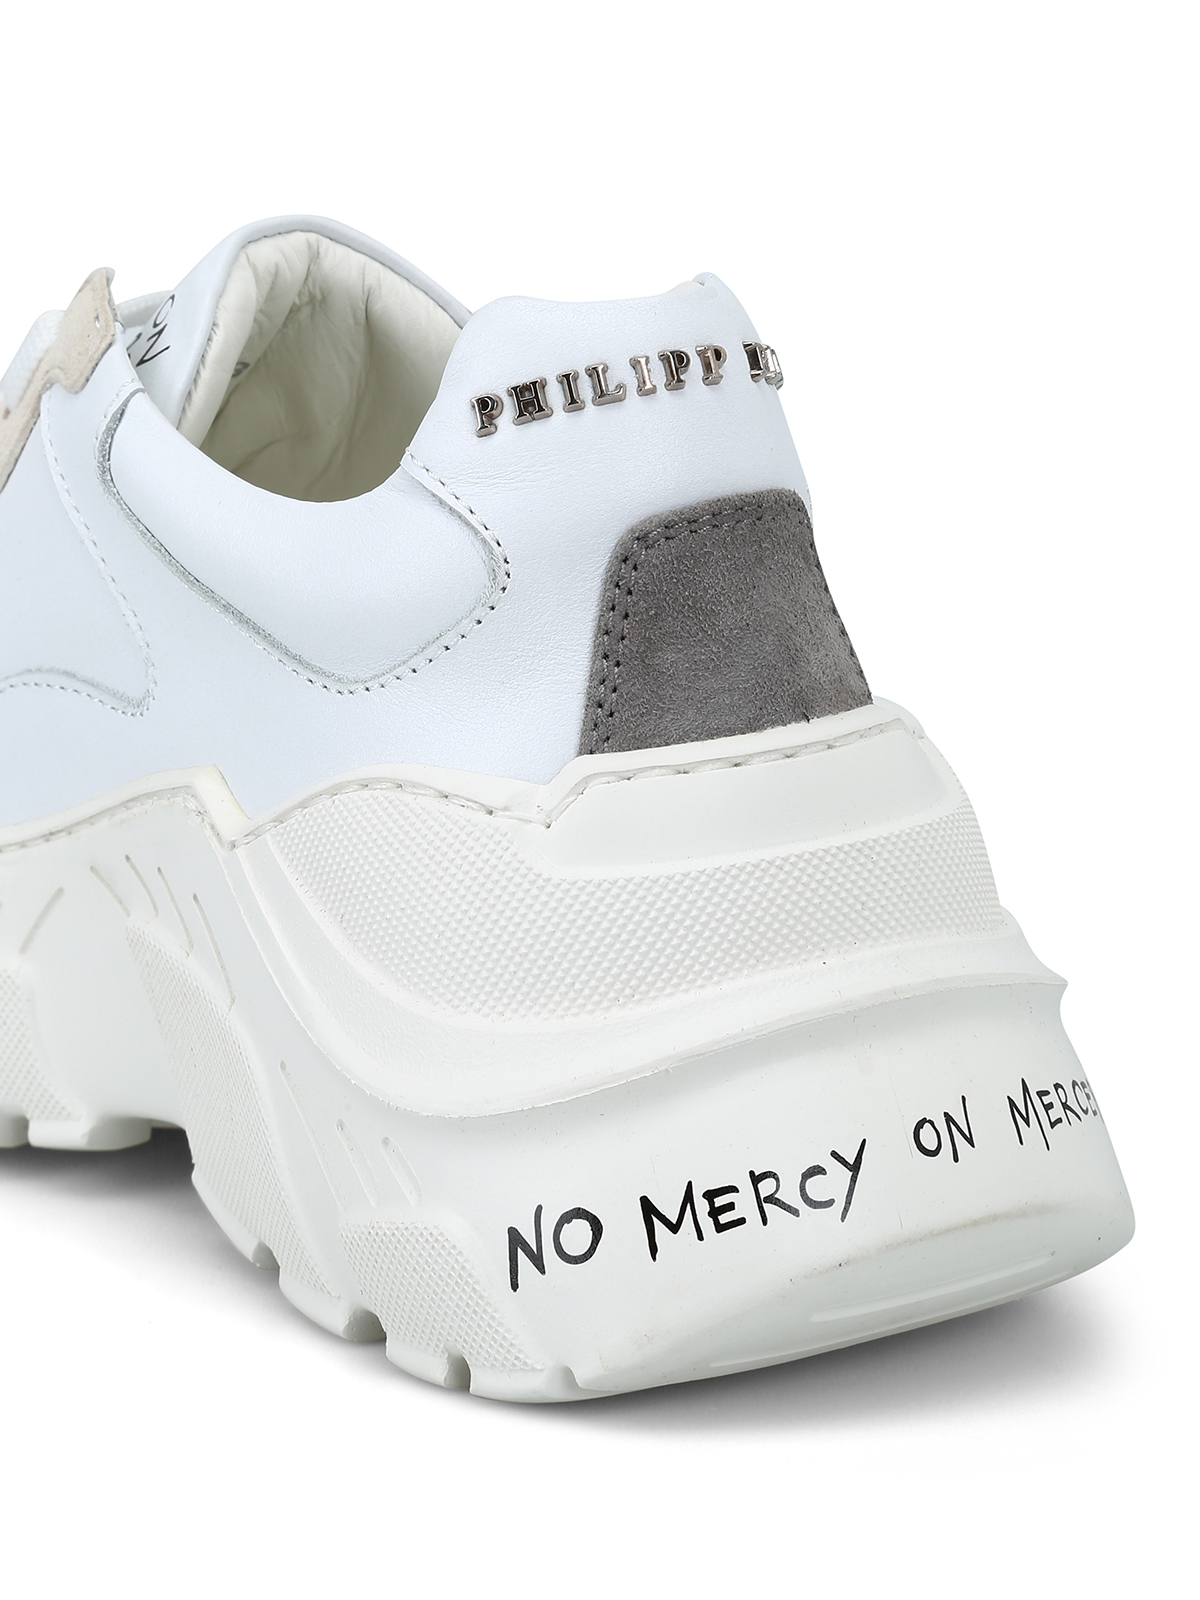 philipp plein no mercy shoes